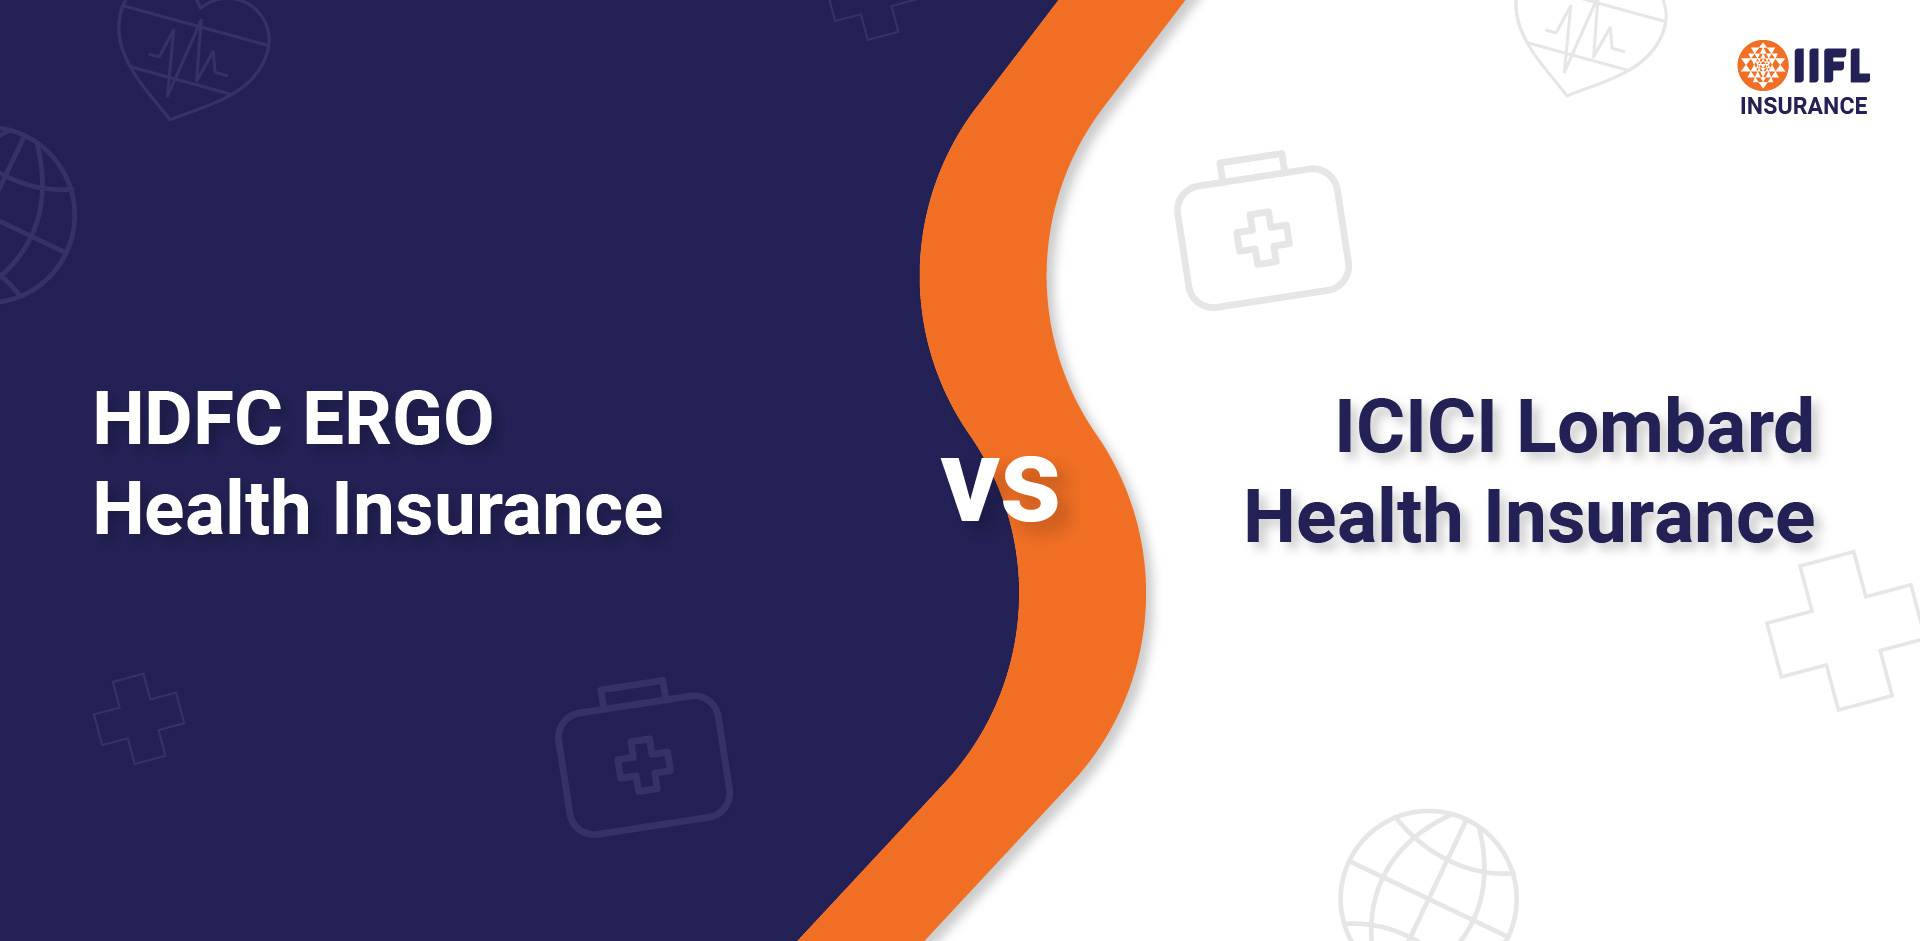 HDFC ERGO Health Insurance vs ICICI Lombard Health Insurance